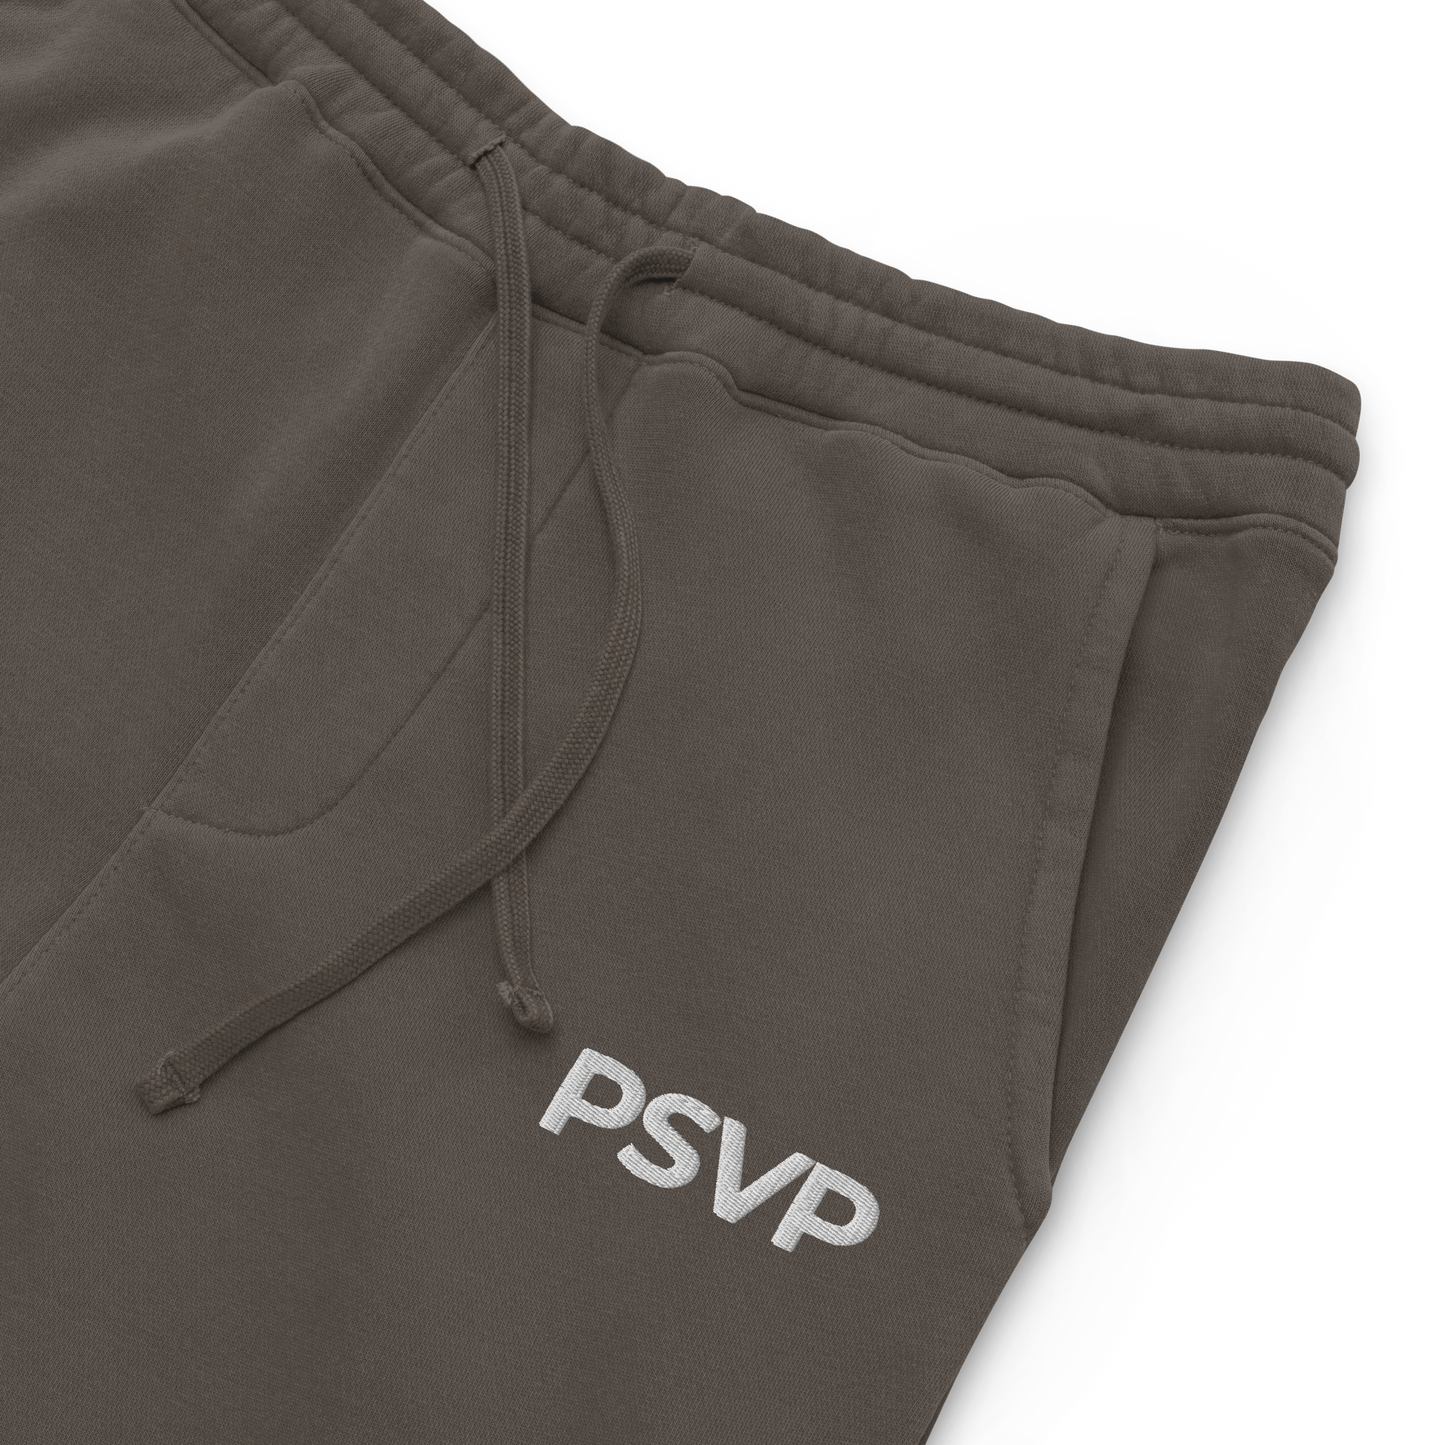 Women's Pigment-Dyed Black Sweatpants - PSVP Embroidery | Sweatpants | PARADIS SVP